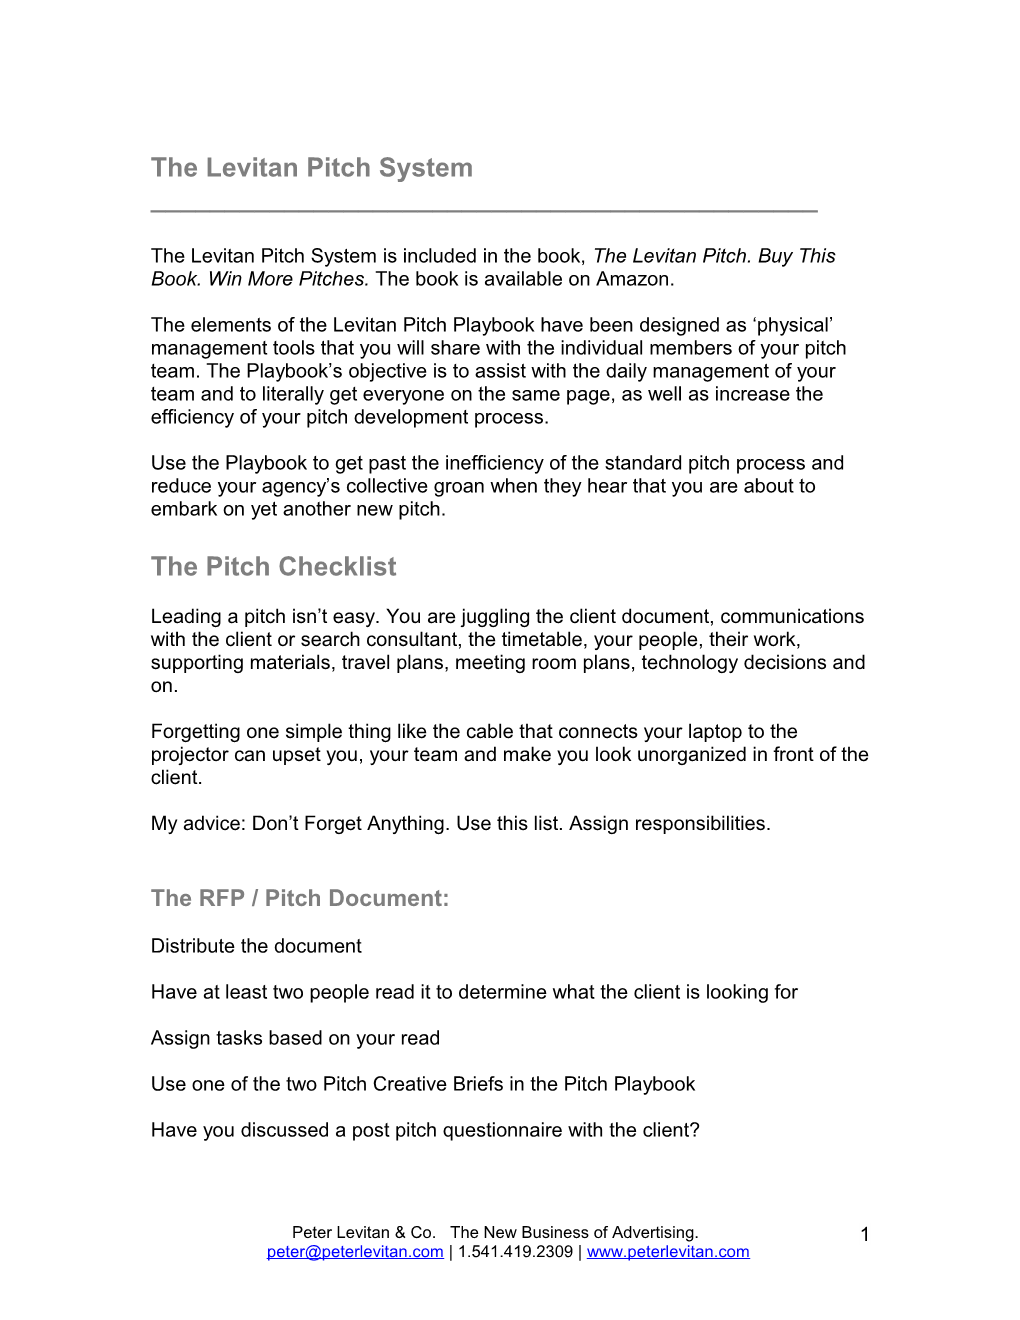 The Levitan Pitchsystem